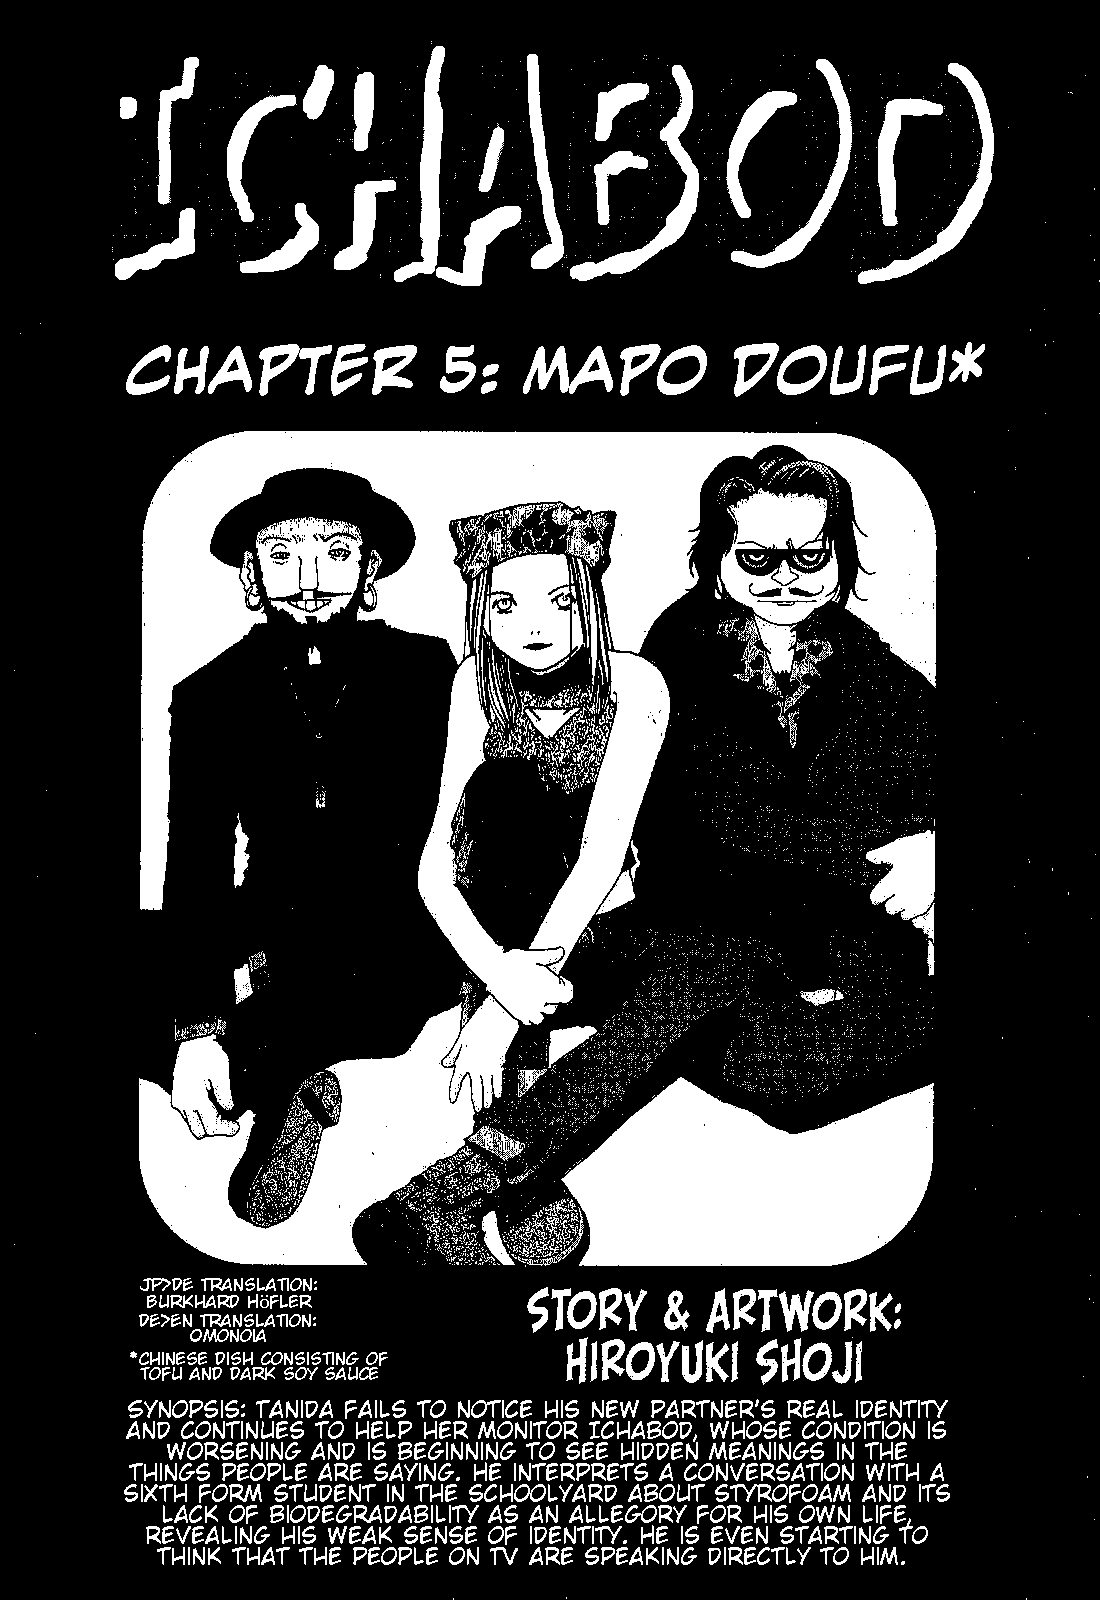 The Life of Ichabod Vol. 1 Ch. 5 Mapo Doufu